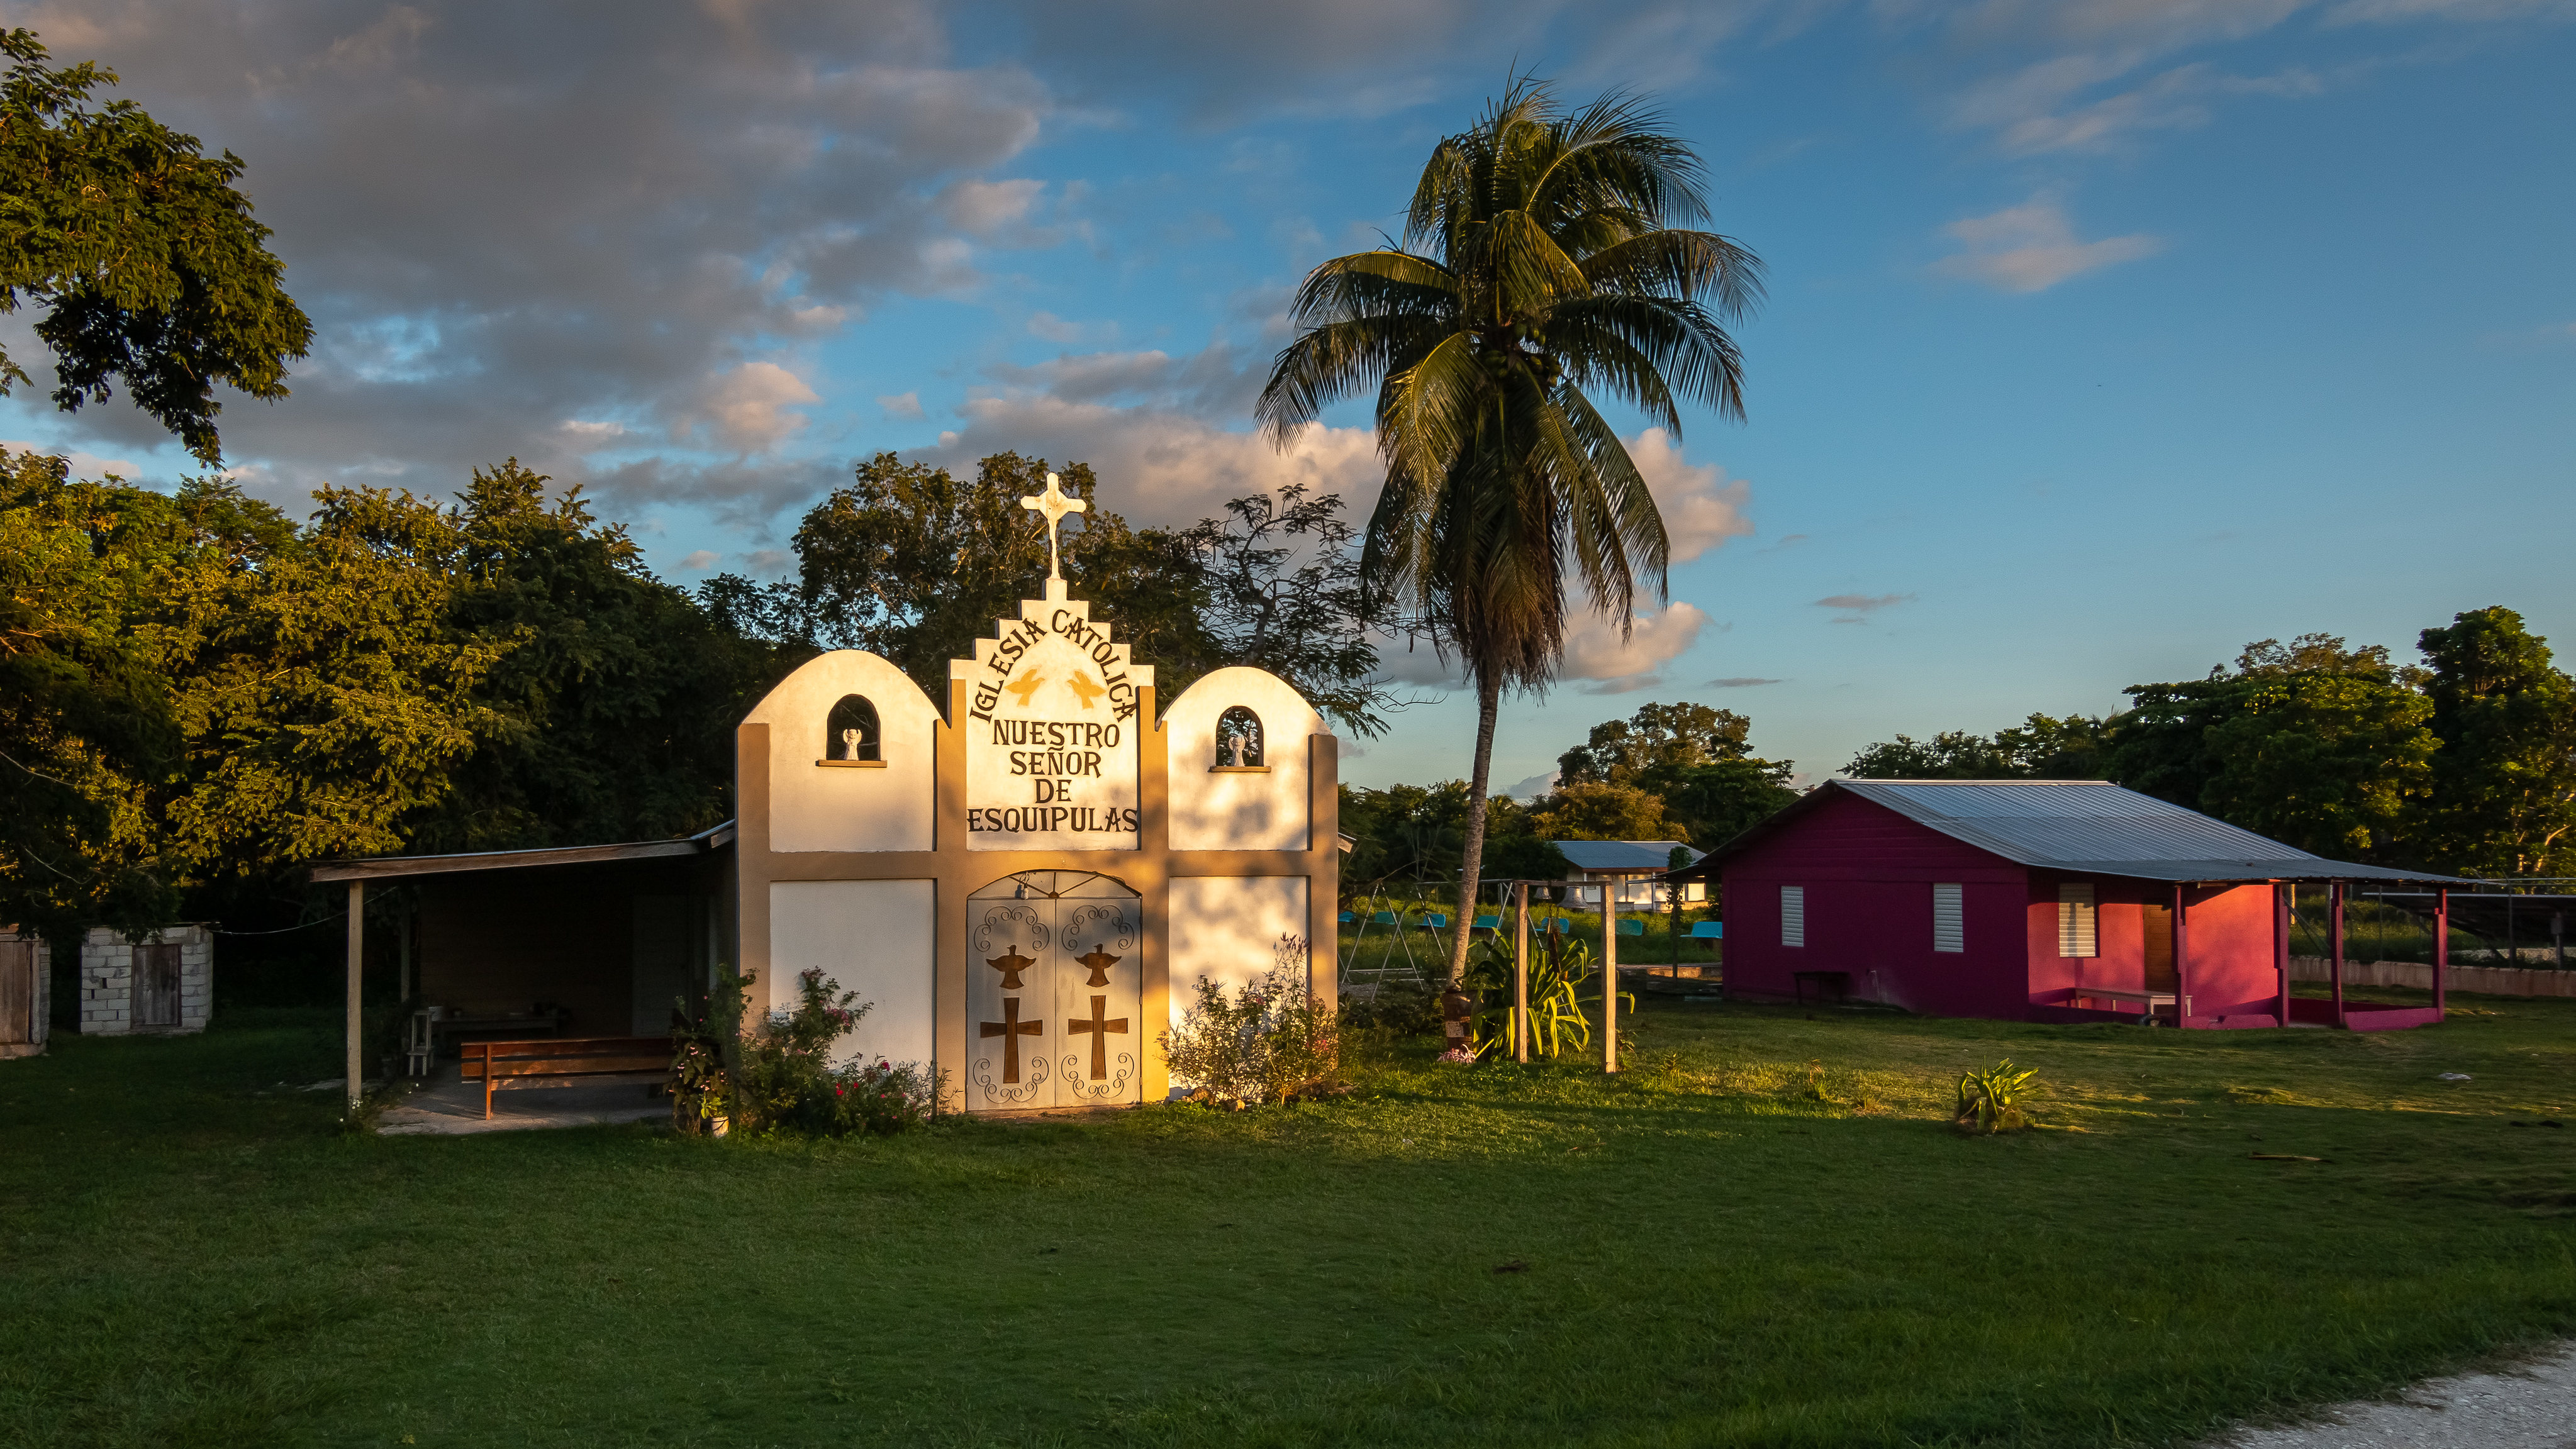 Indian Church Village - [Belize]